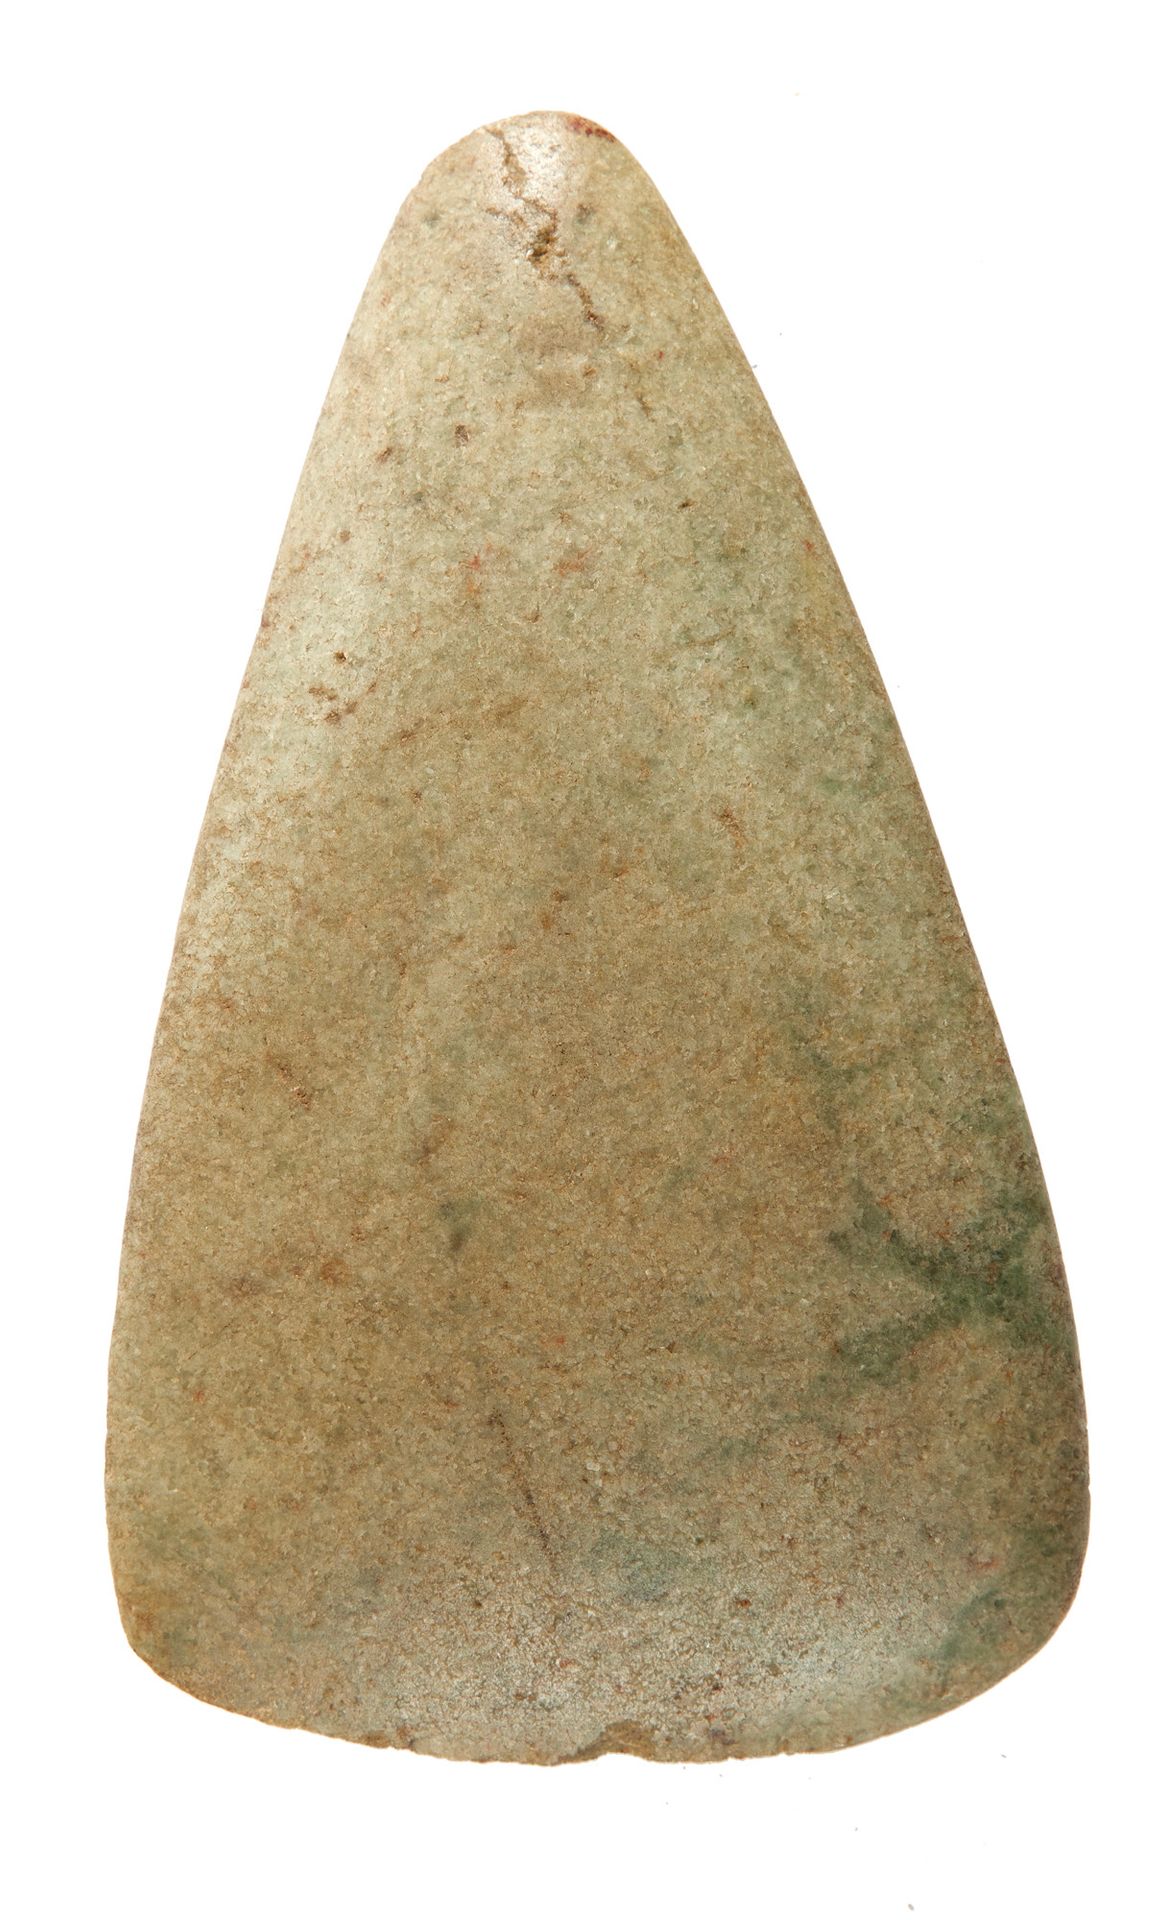 Herminette triangulaire polie. Adze triangolare lucidato.

Giadeite verde, picco&hellip;